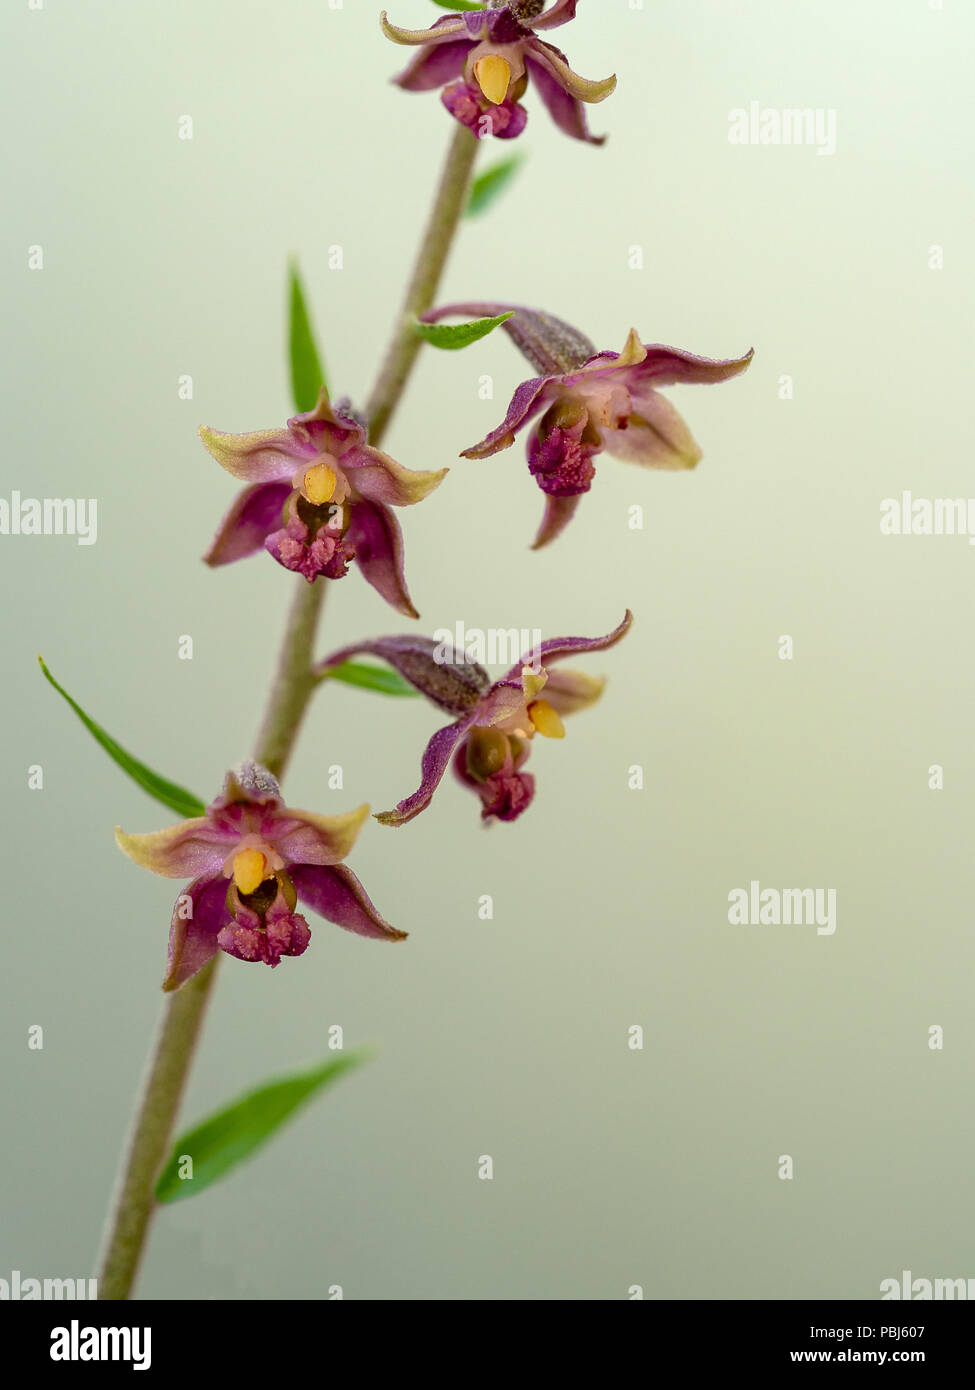 Red Helleborine wild orchid, Epipactis atrorubens. Photographed in situ on plain background. Stock Photo